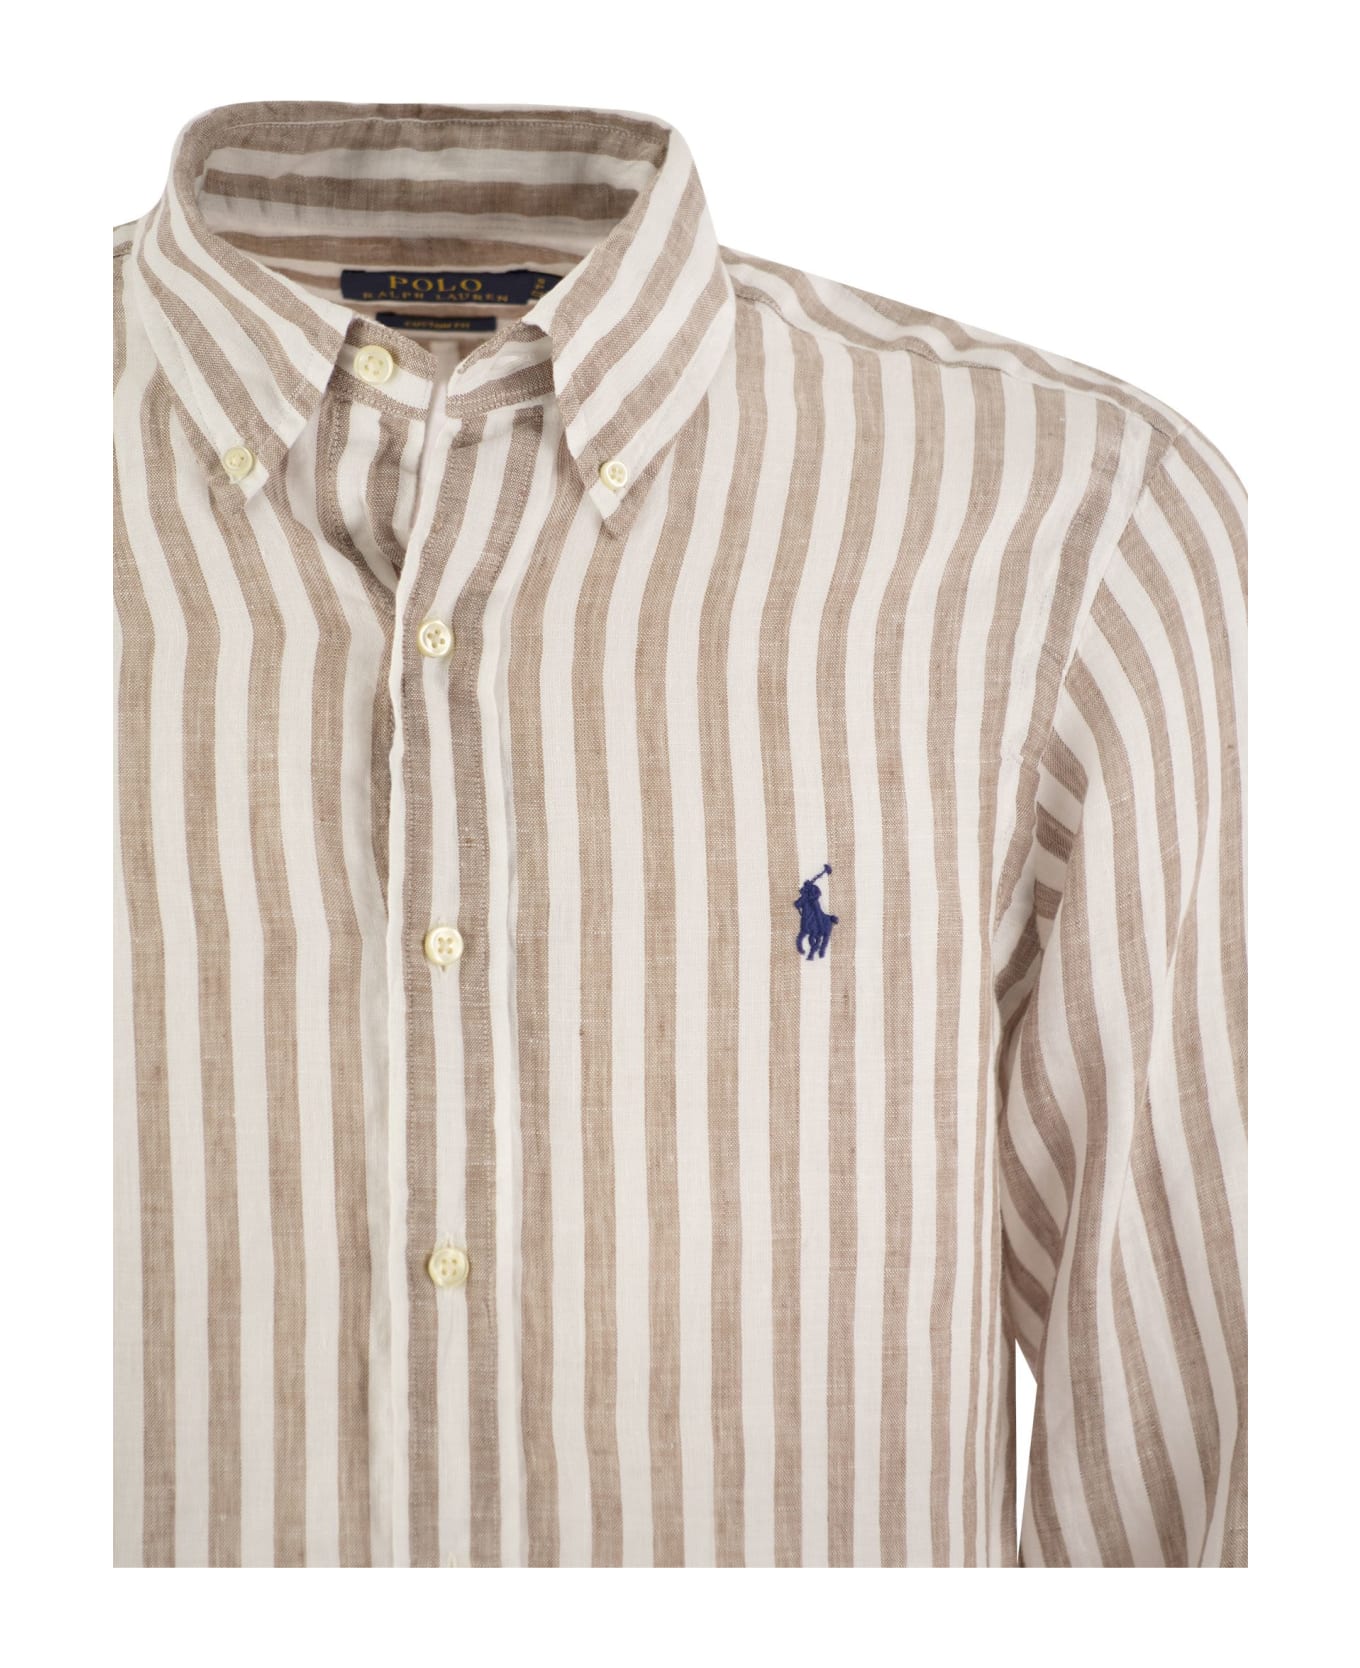 Polo Ralph Lauren Linen Shirt With Striped Pattern And Logo - Kaki/white シャツ